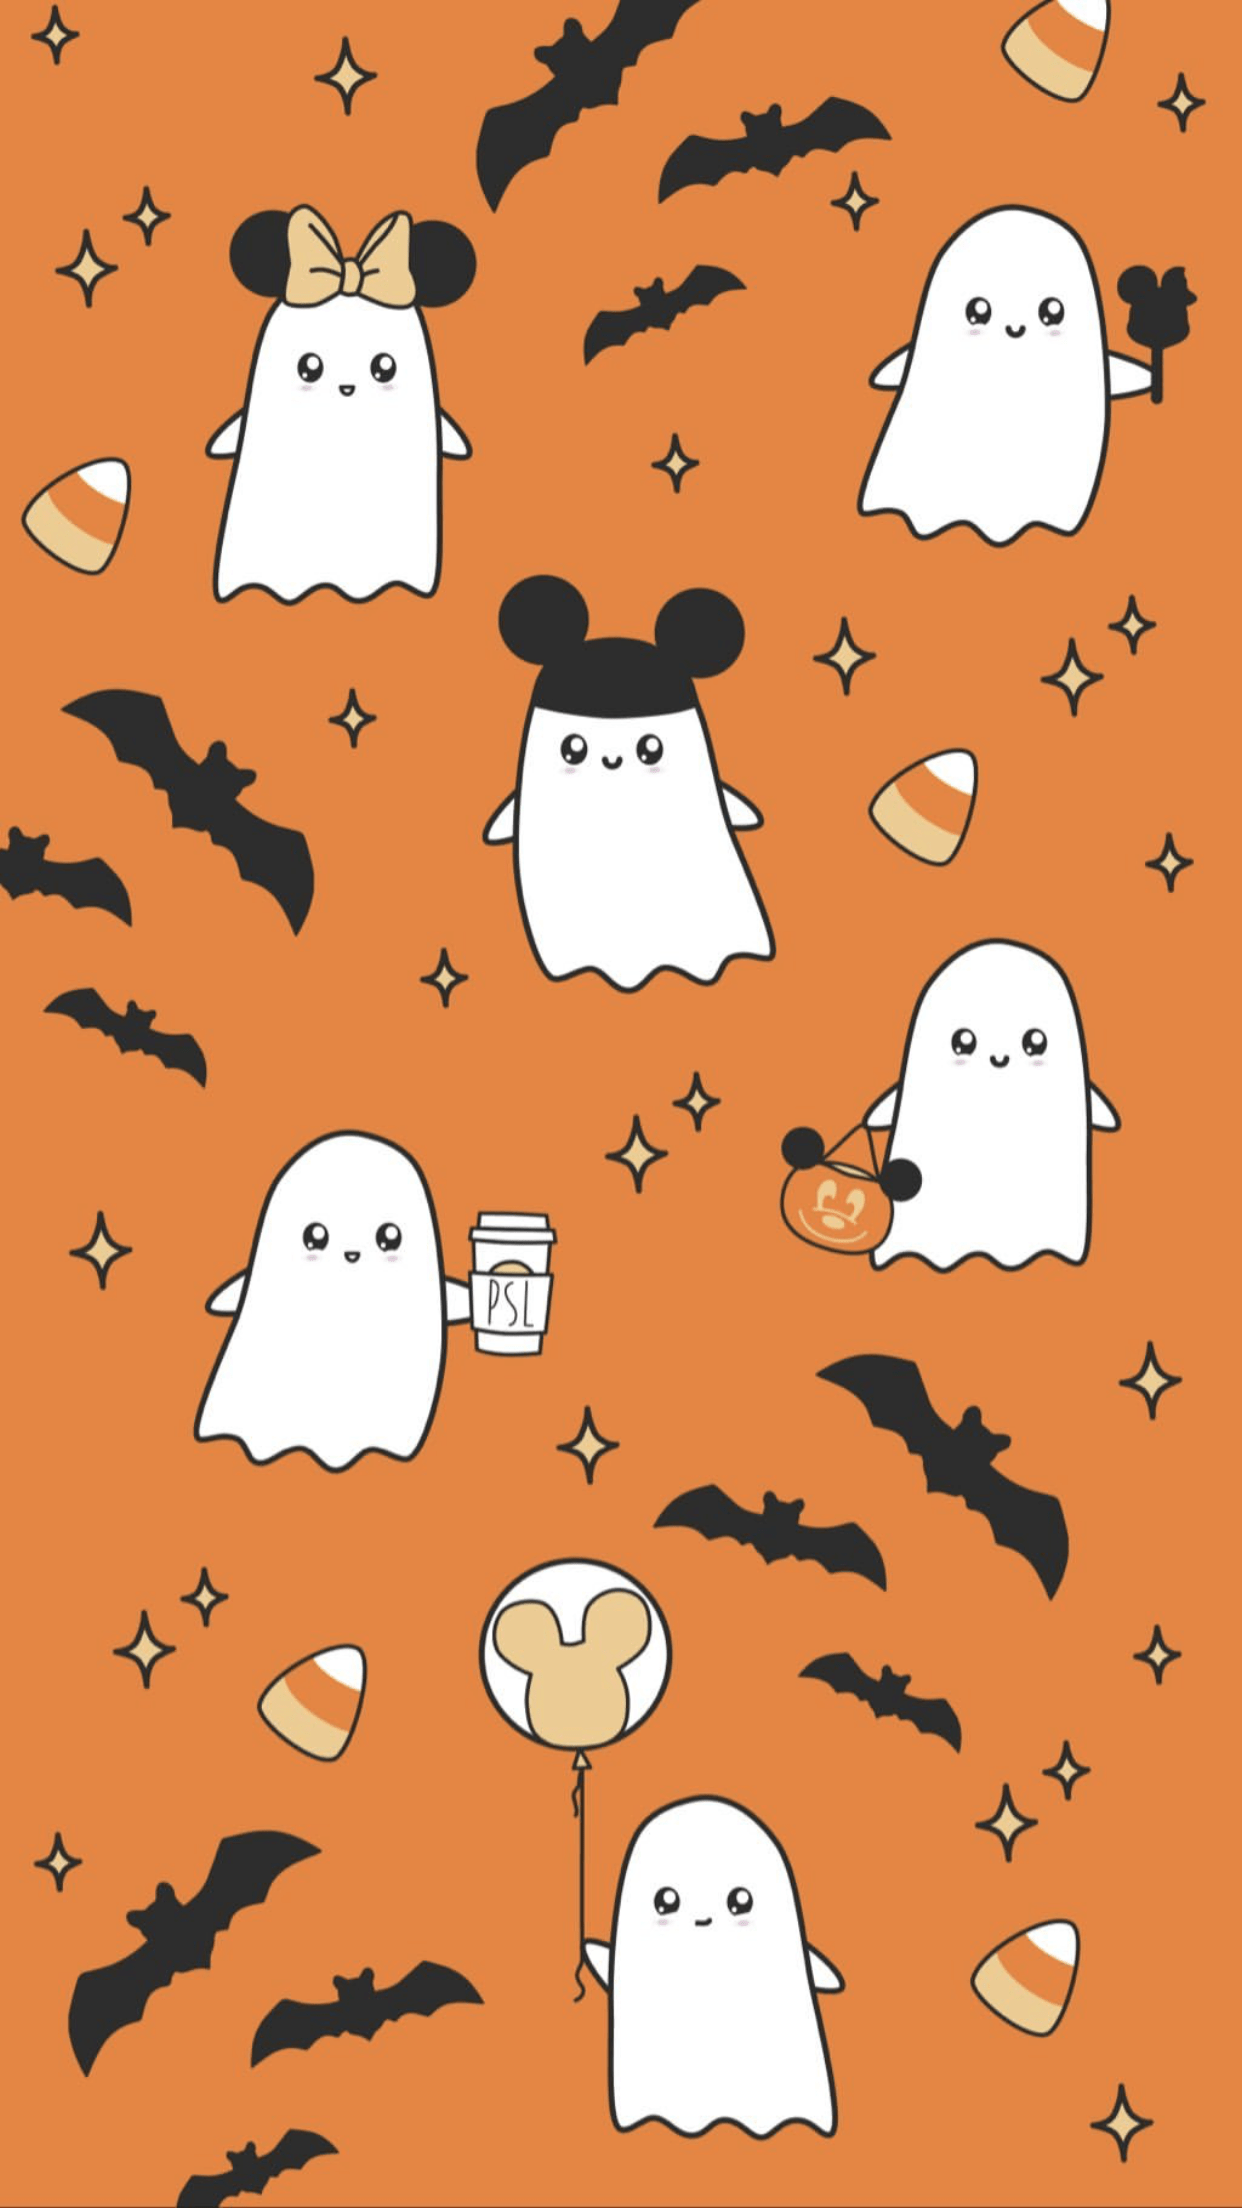 Disney Halloween Wallpaper. Papel tapiz disney, Fondos de halloween iphone, Fondos de halloween